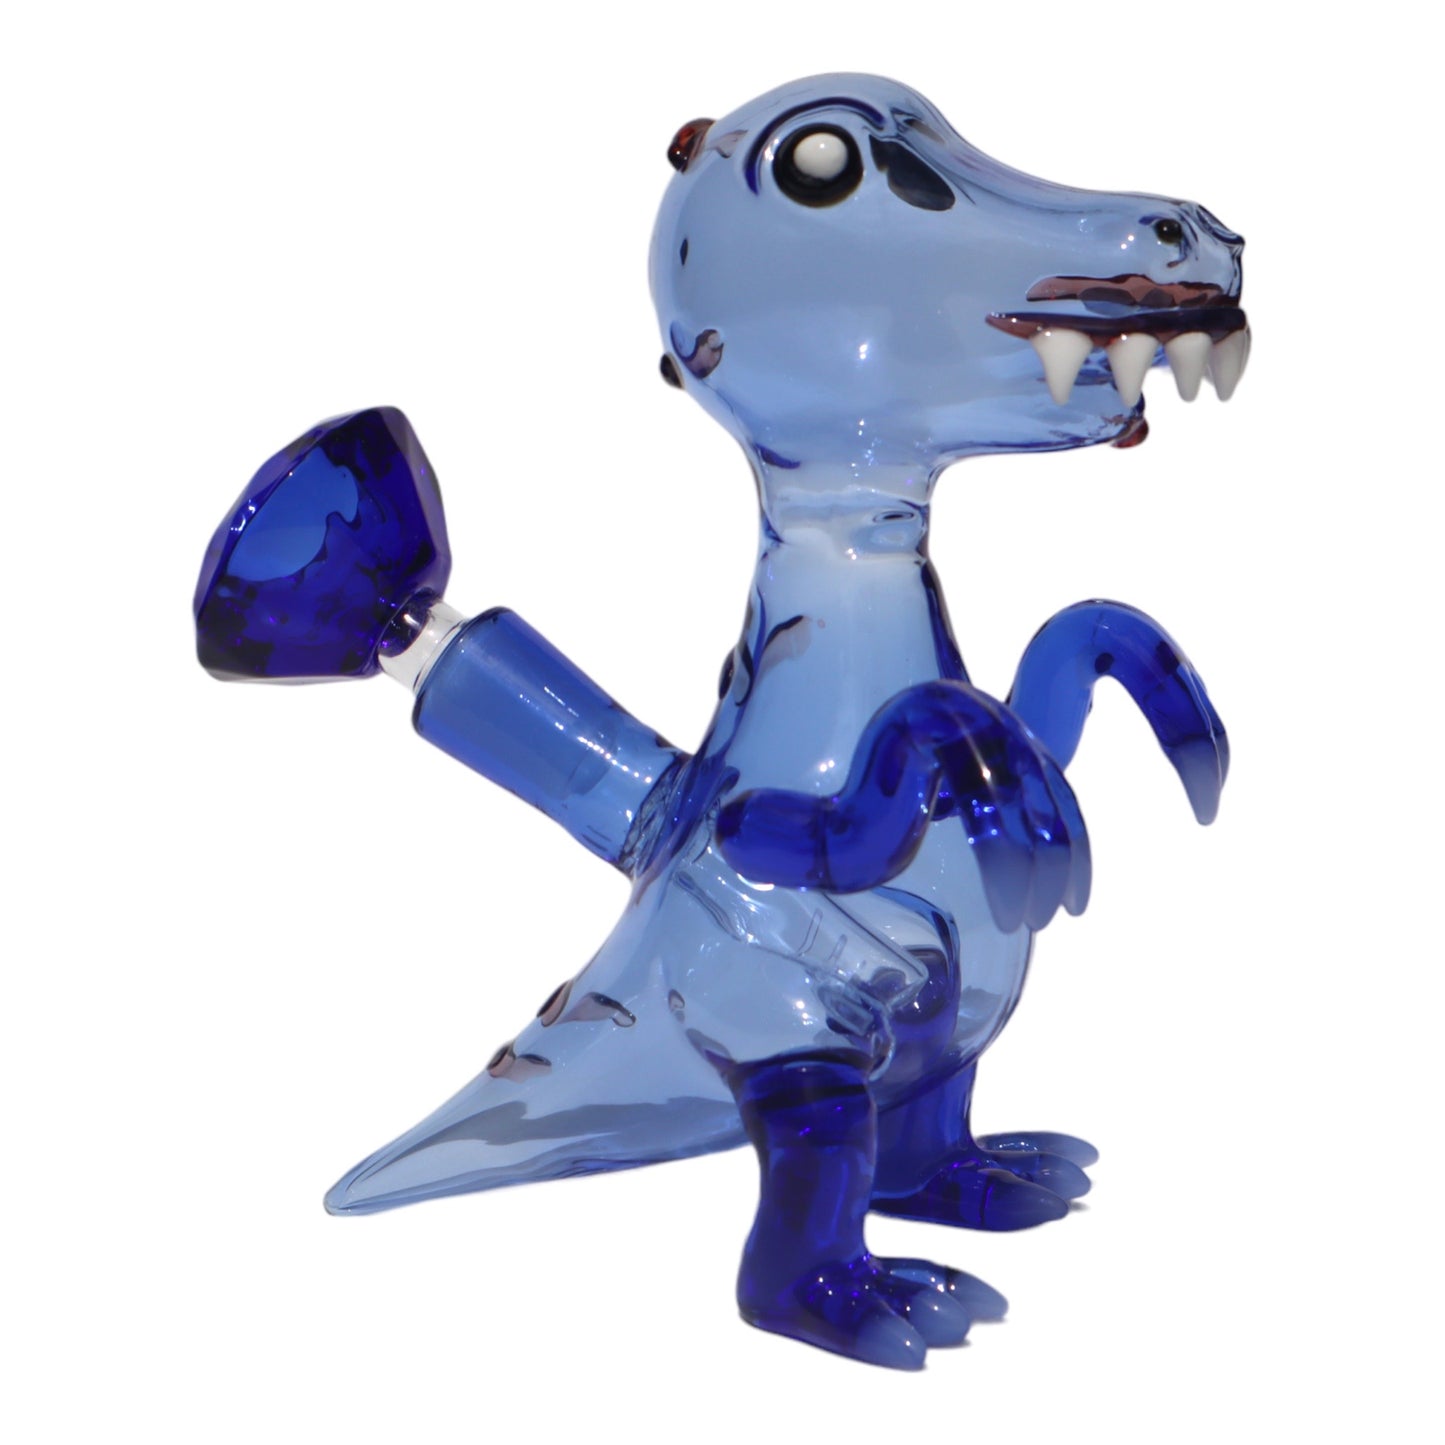 BrokeBois - Dino Rig "Blue"